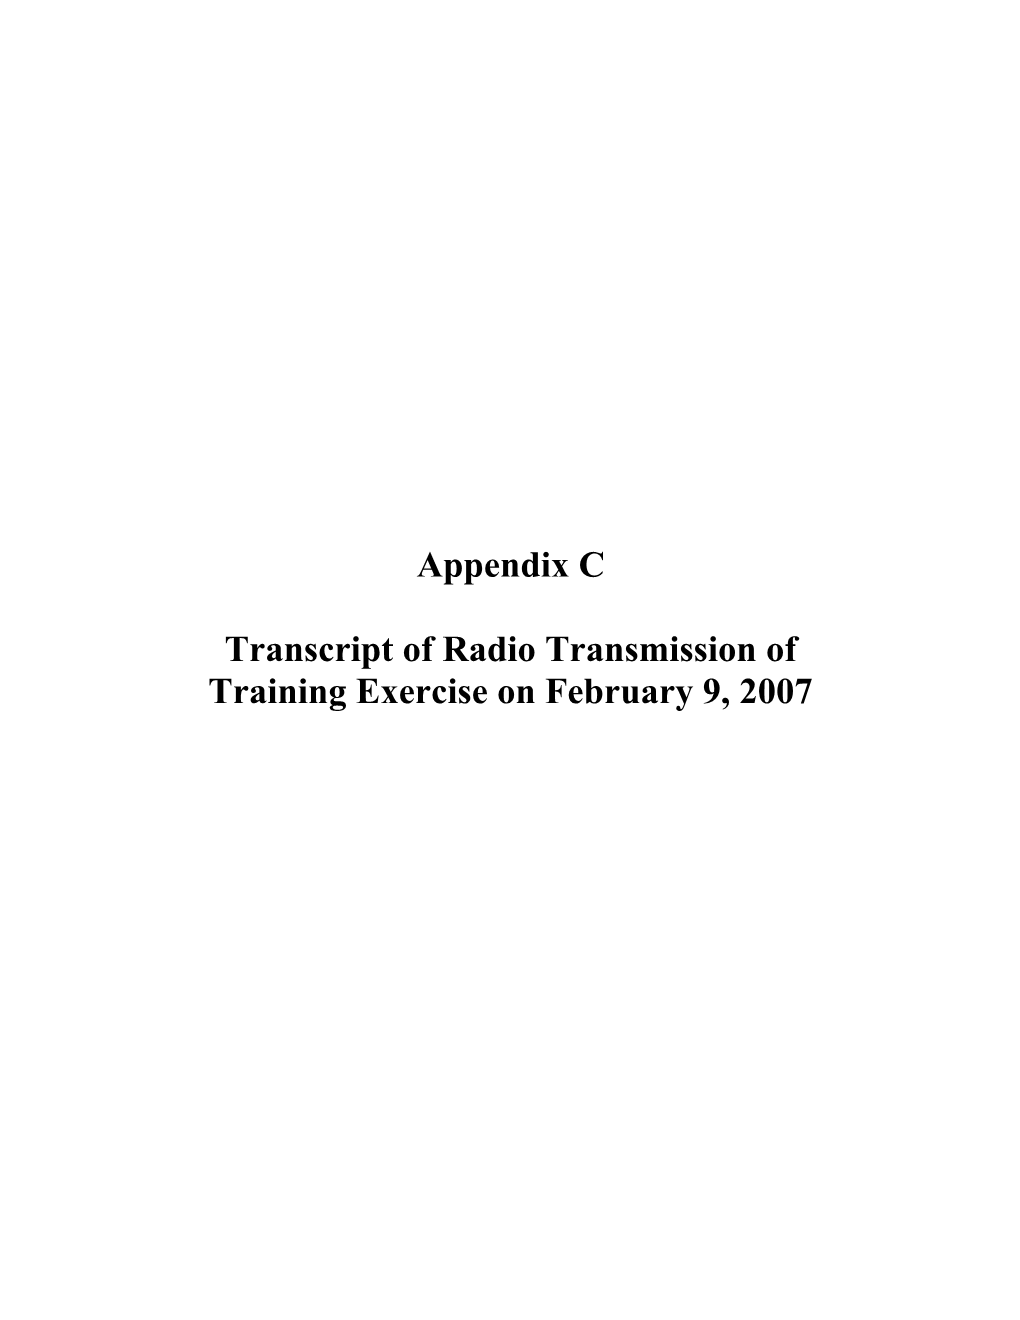 Transcript of Radio Transmission Of